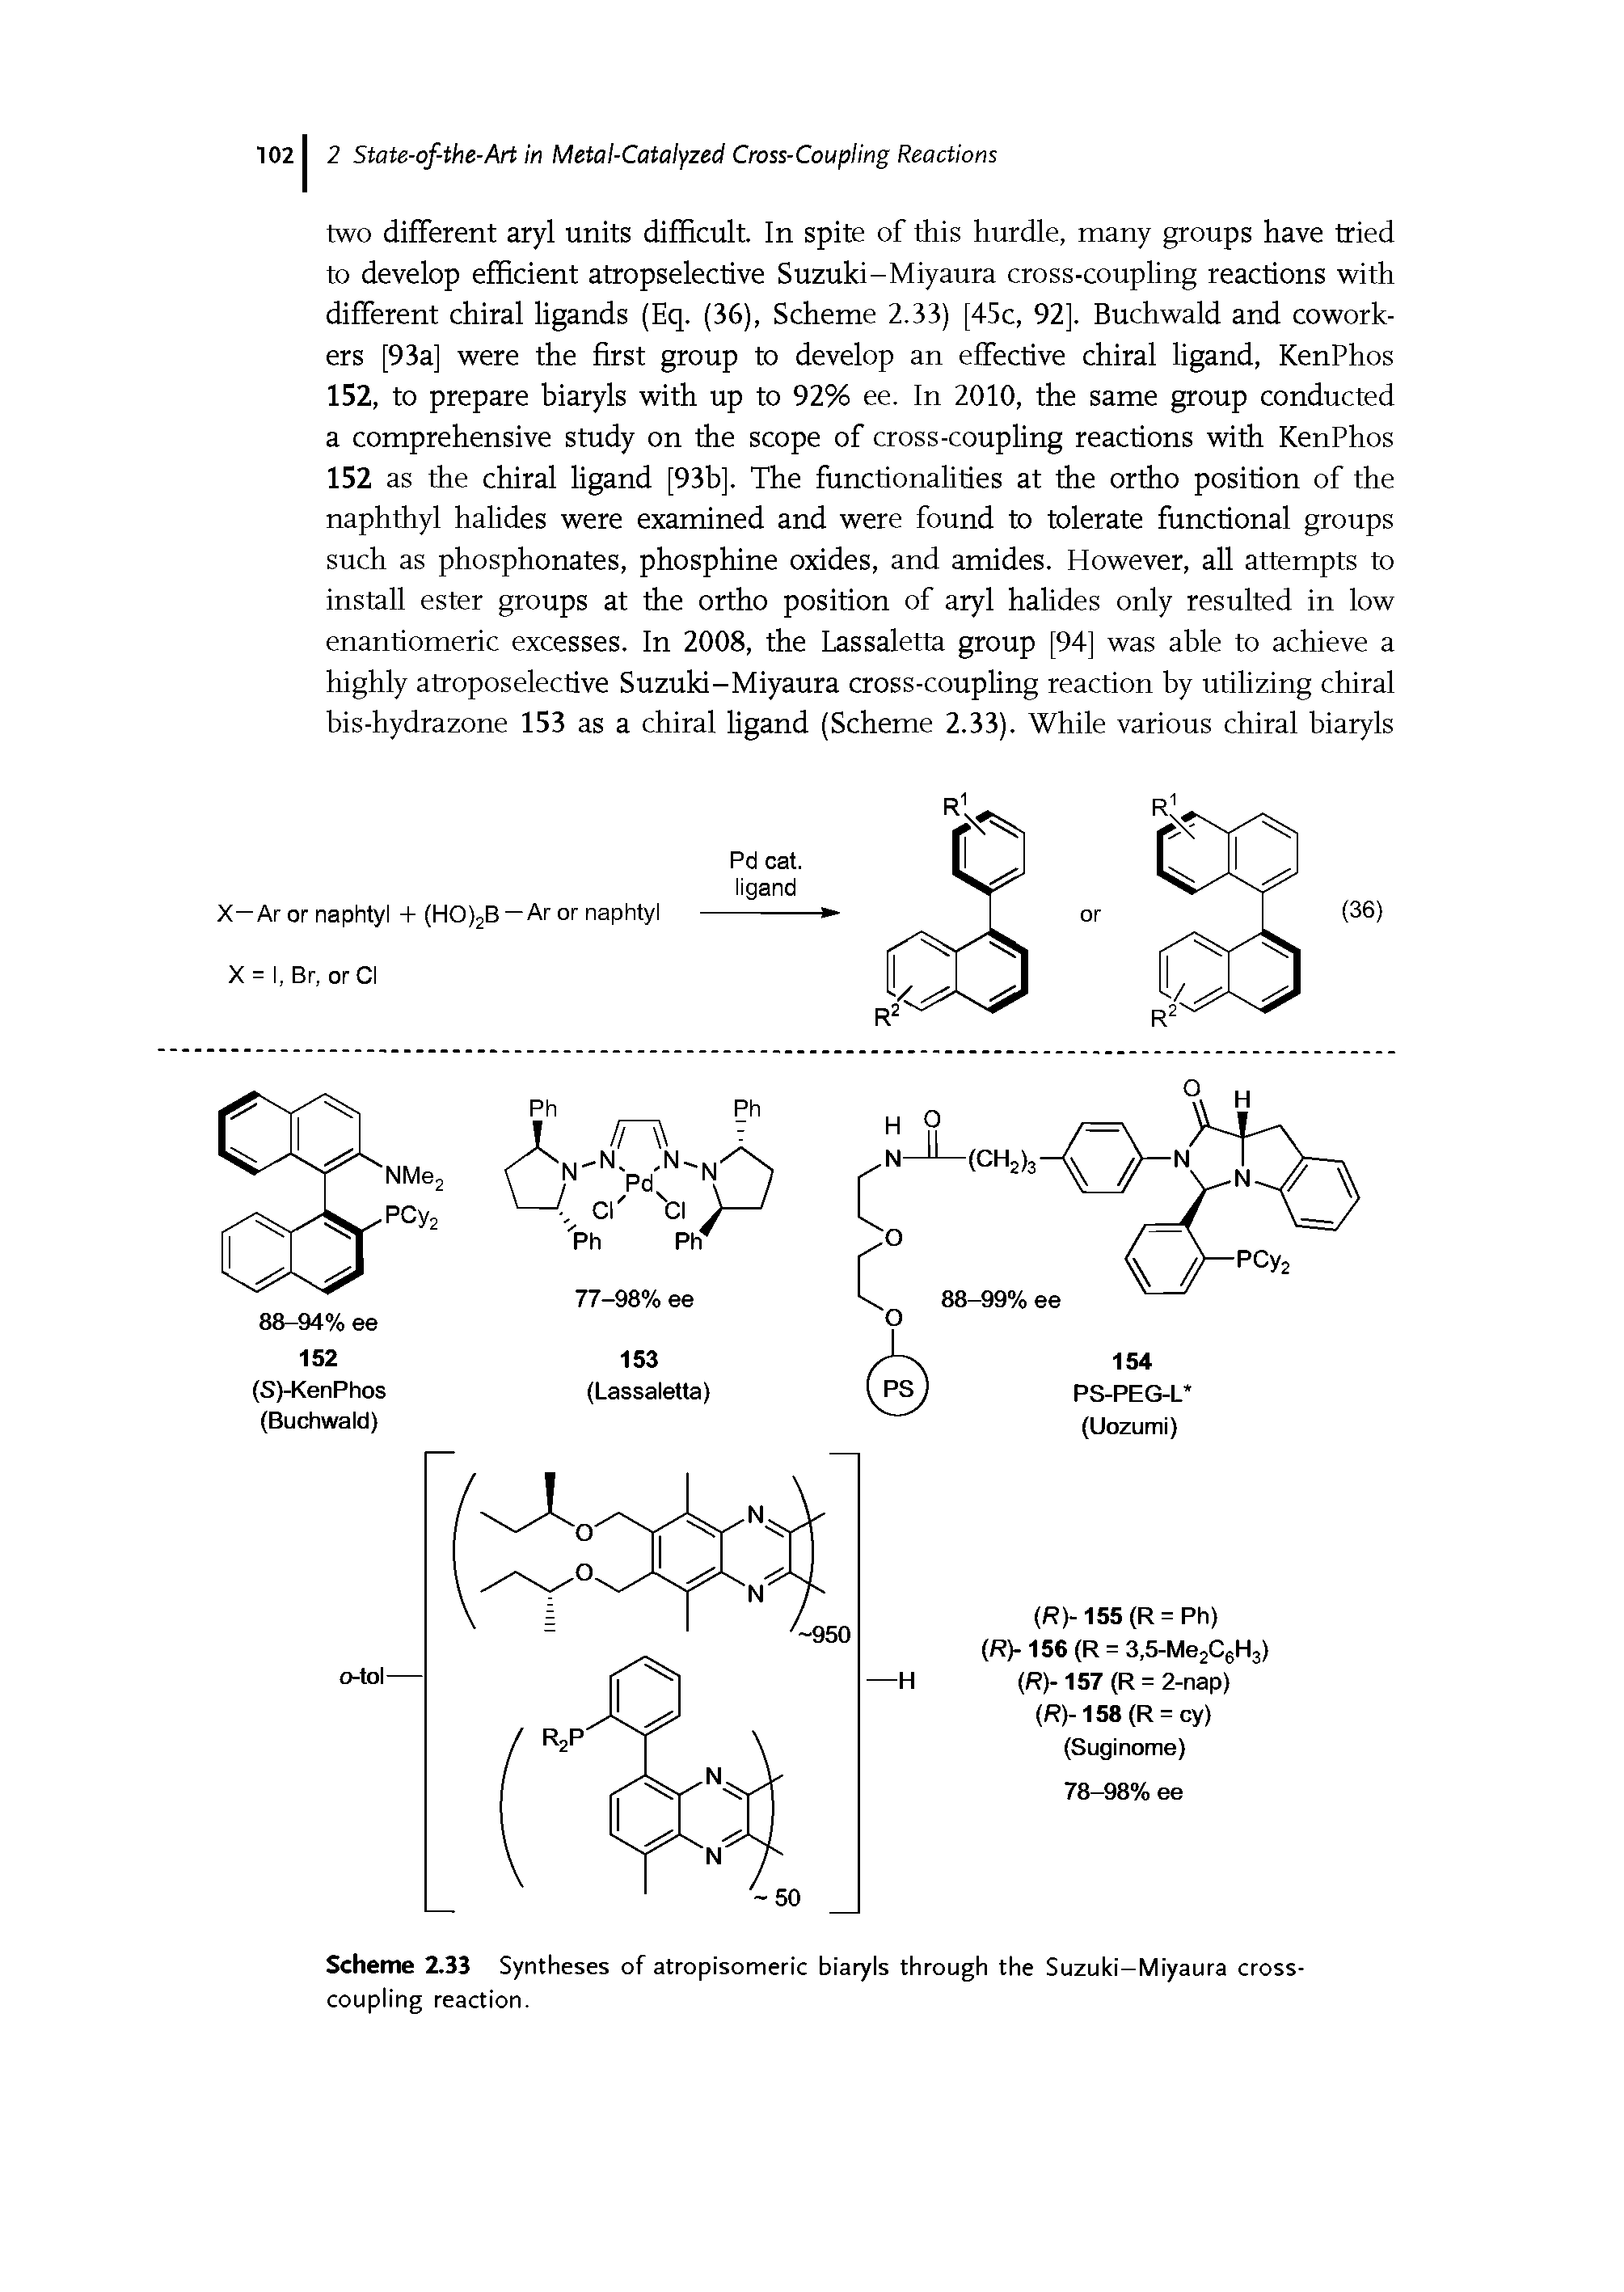 Scheme 2.33 Syntheses of atropisomeric biaryls through the Suzuki-Miyaura crosscoupling reaction.